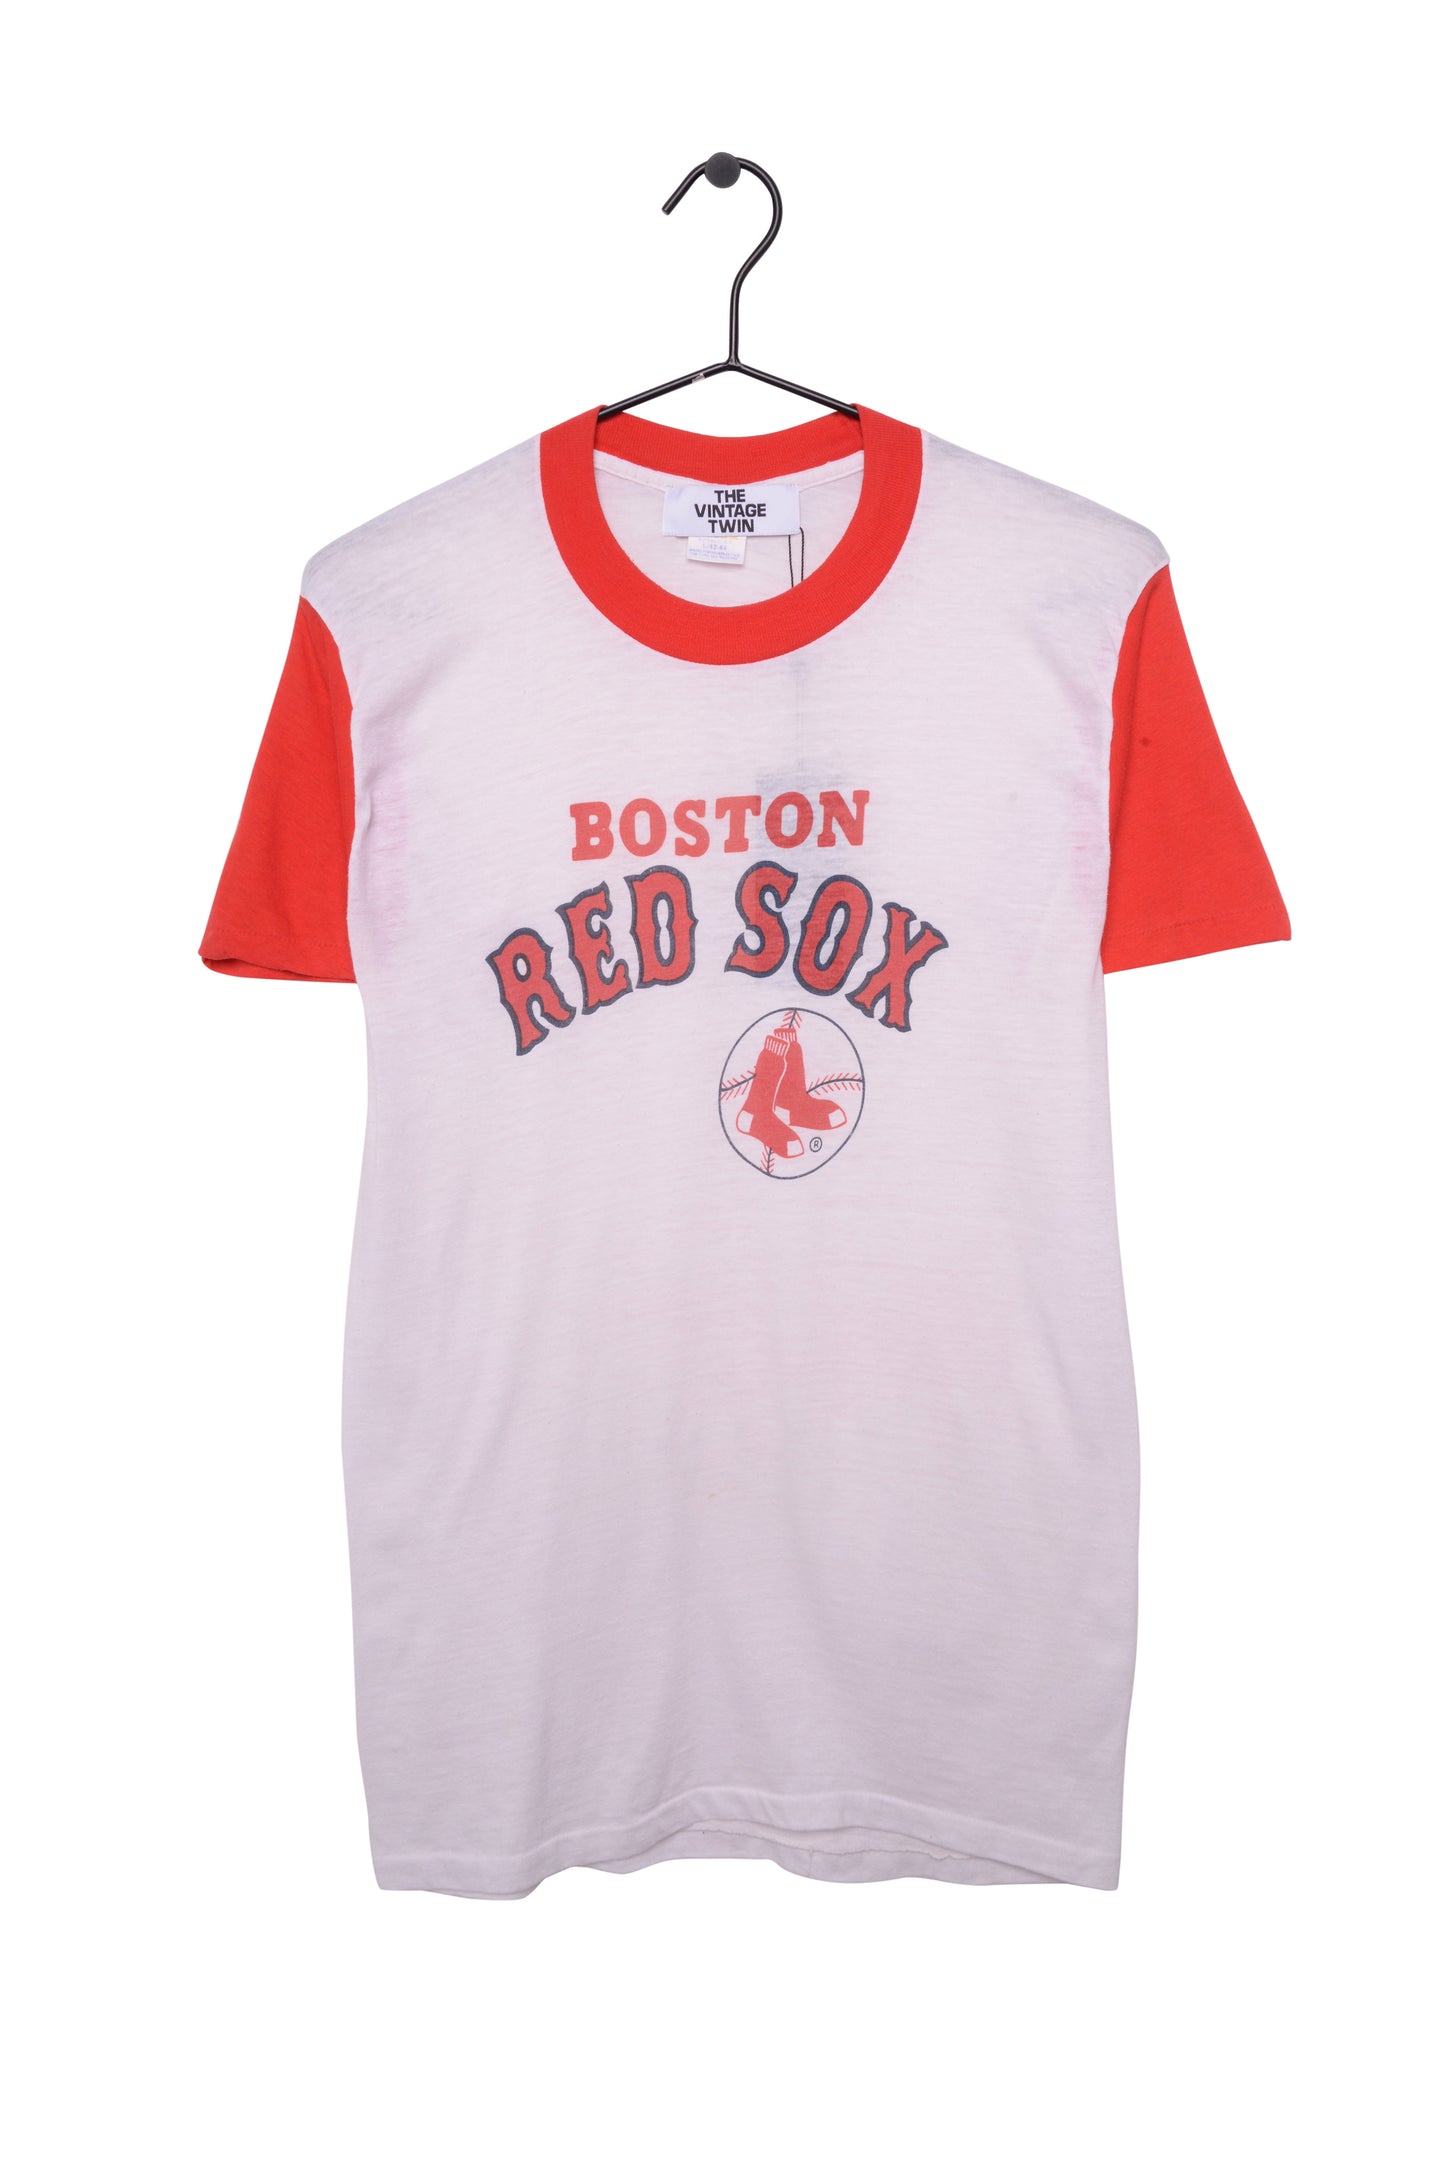 Boston Red Sox Boy's Ringer Tee